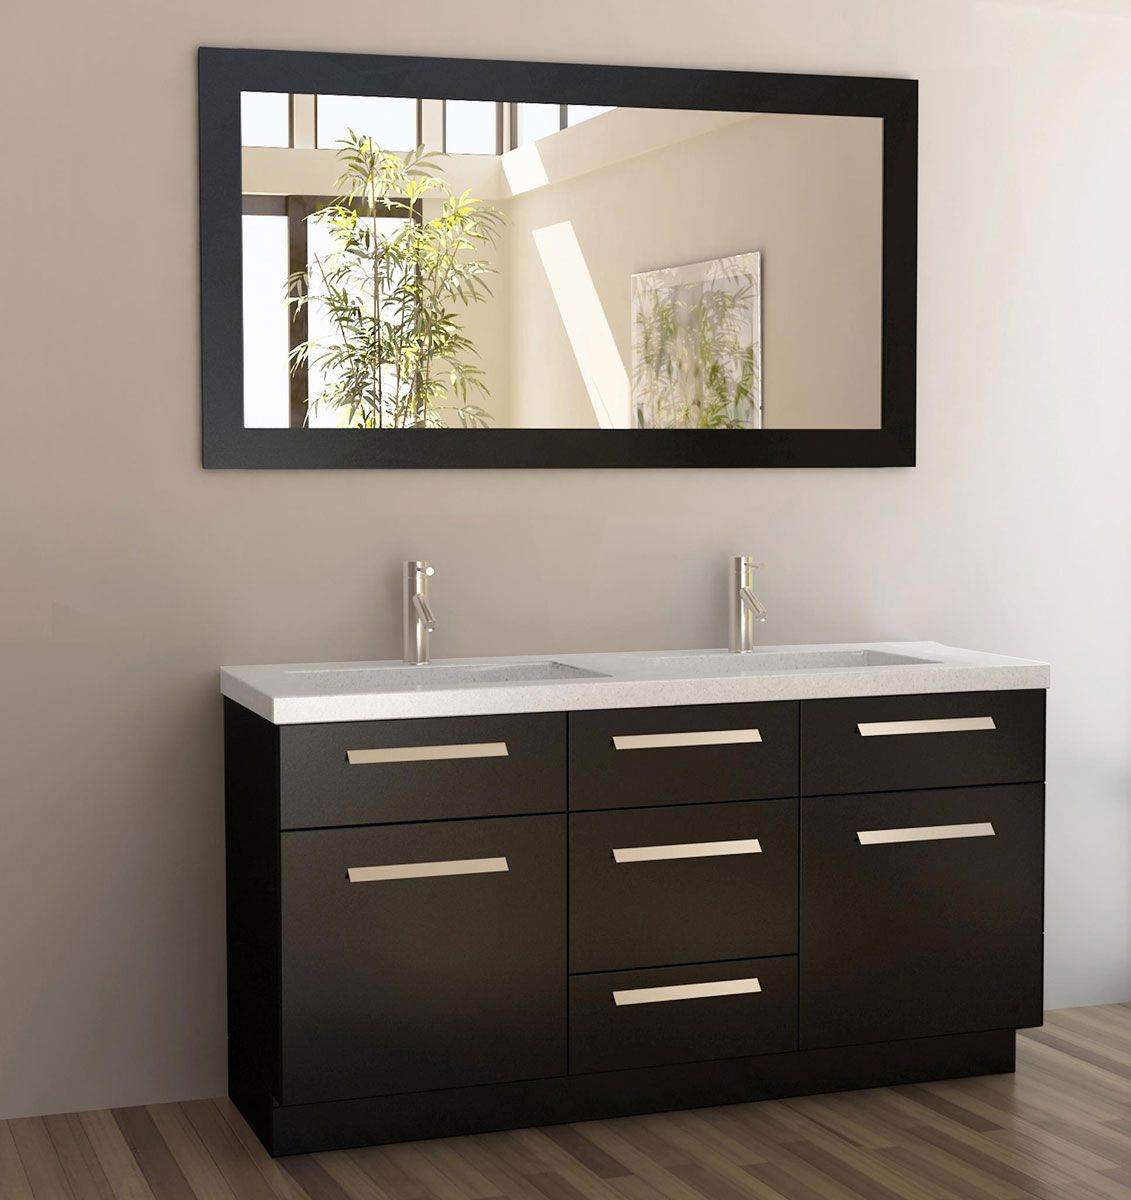 moscony double sink vanity espresso eco friendly vanities